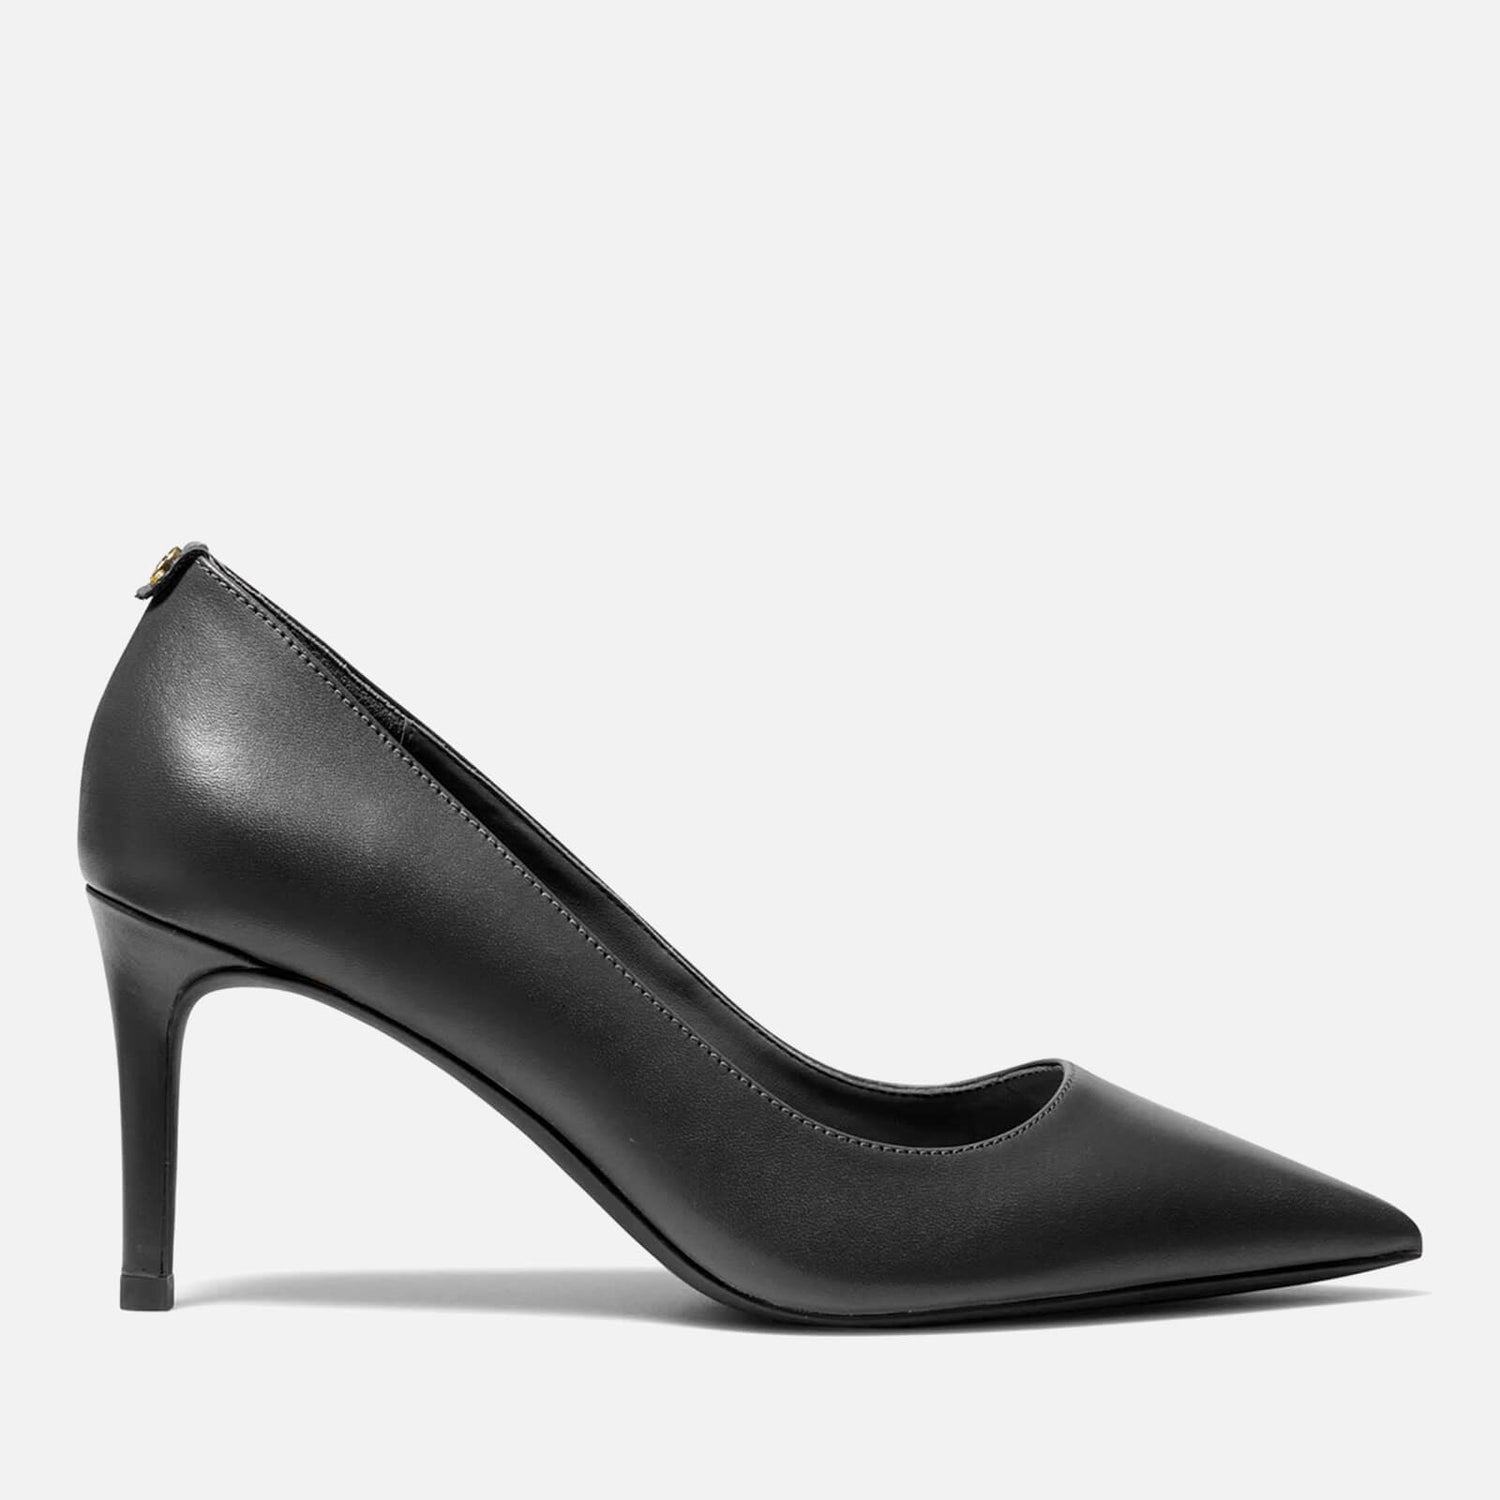 MICHAEL Michael Kors Women's Alina Leather Court Shoes - UK 4